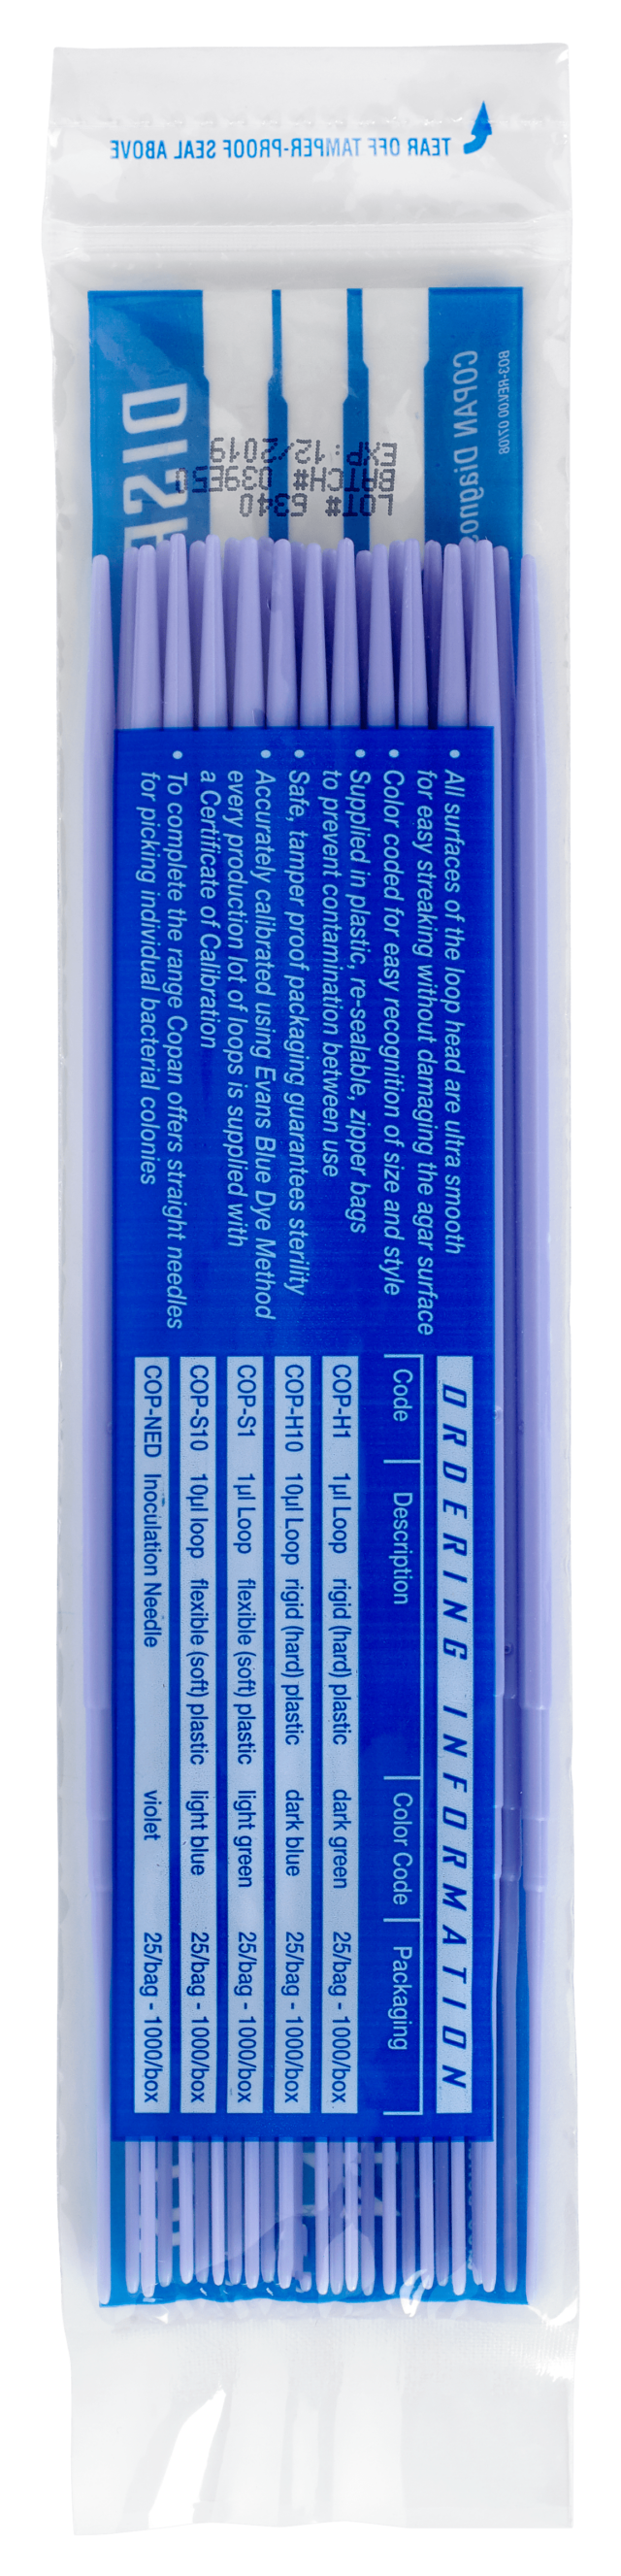 Plastic Inoculating Loops, Needles & Spreaders COP-NED 1.45 mm ø - 20 cm Length Violet Plastic Inoculation Needle - 25 per Bag